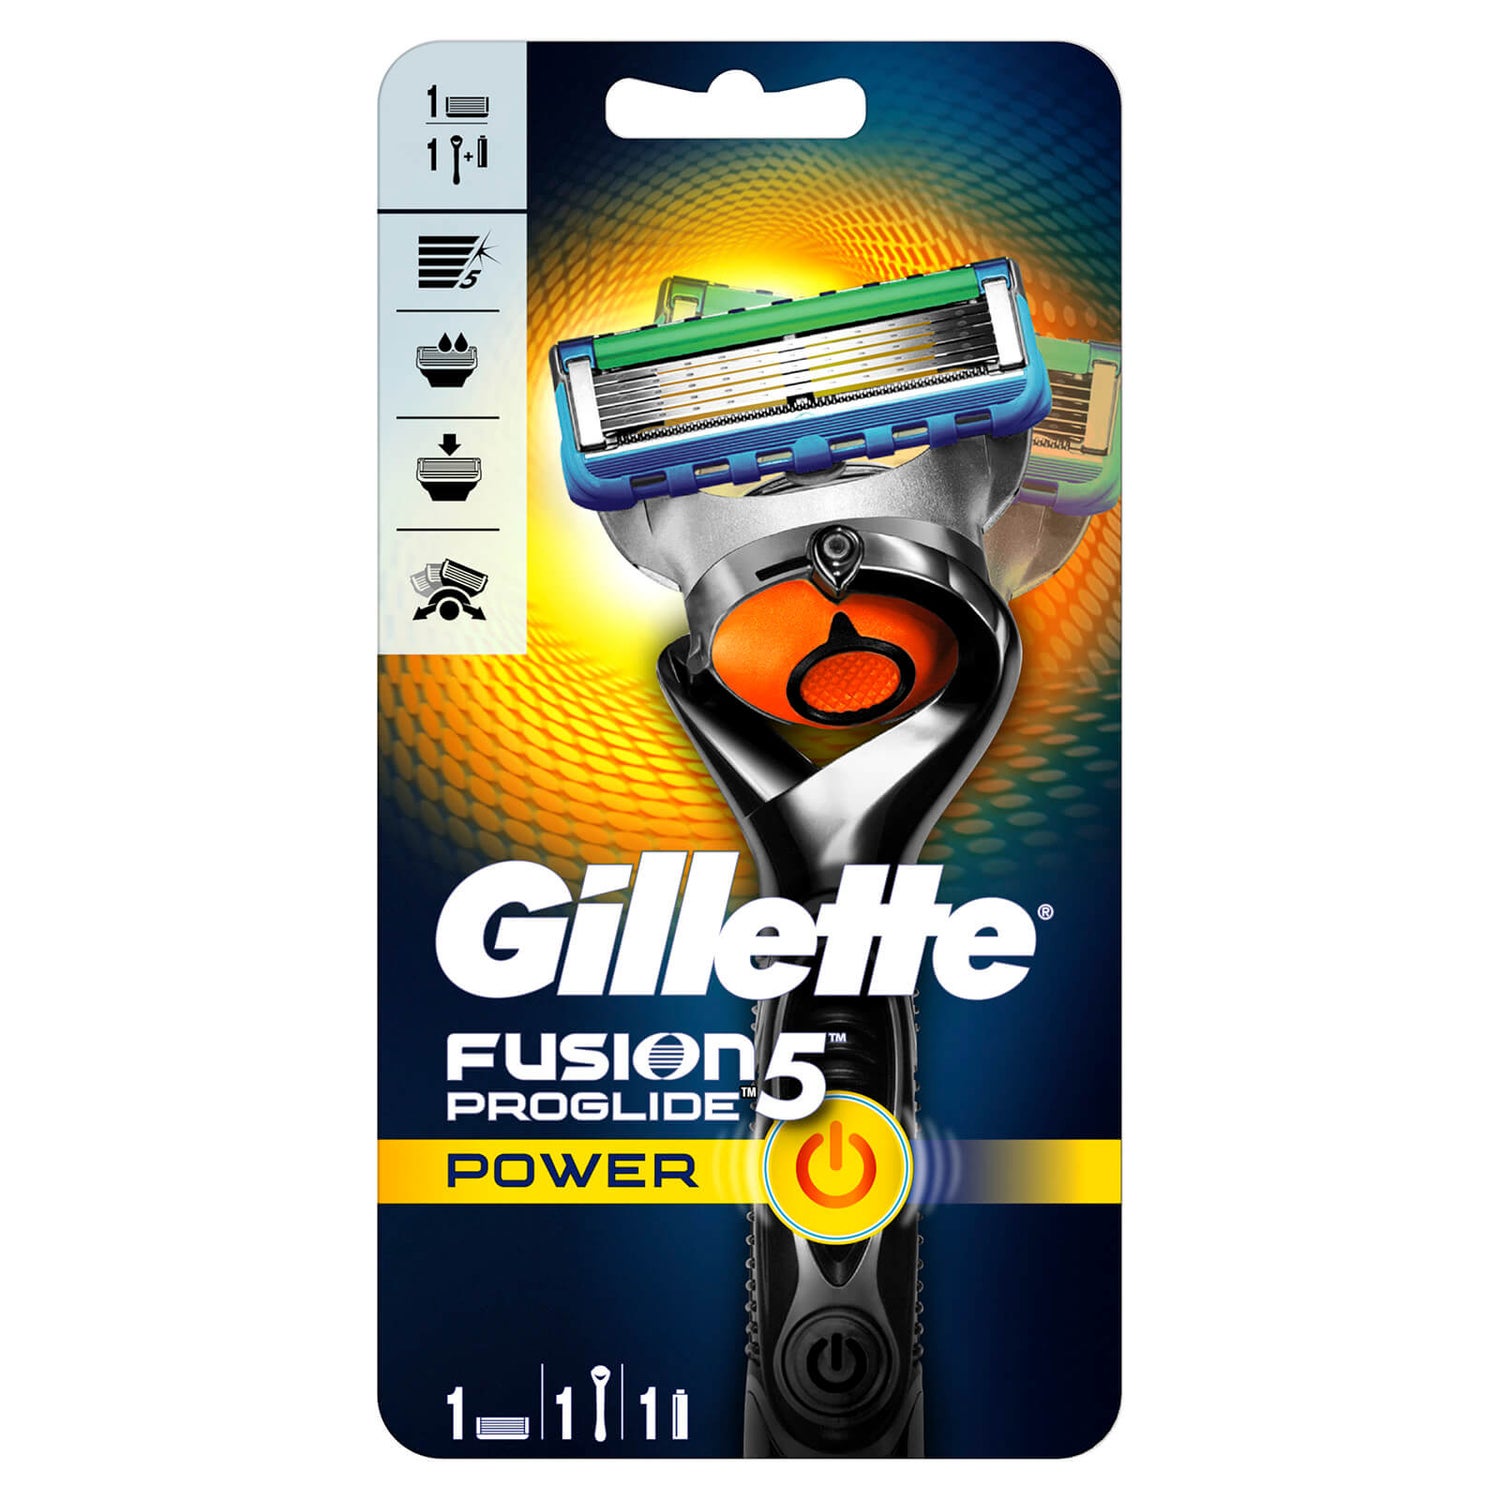 Power Flexball Rasierer als Set 16 Gillette Fusion5 ProGlide Power Klingen 